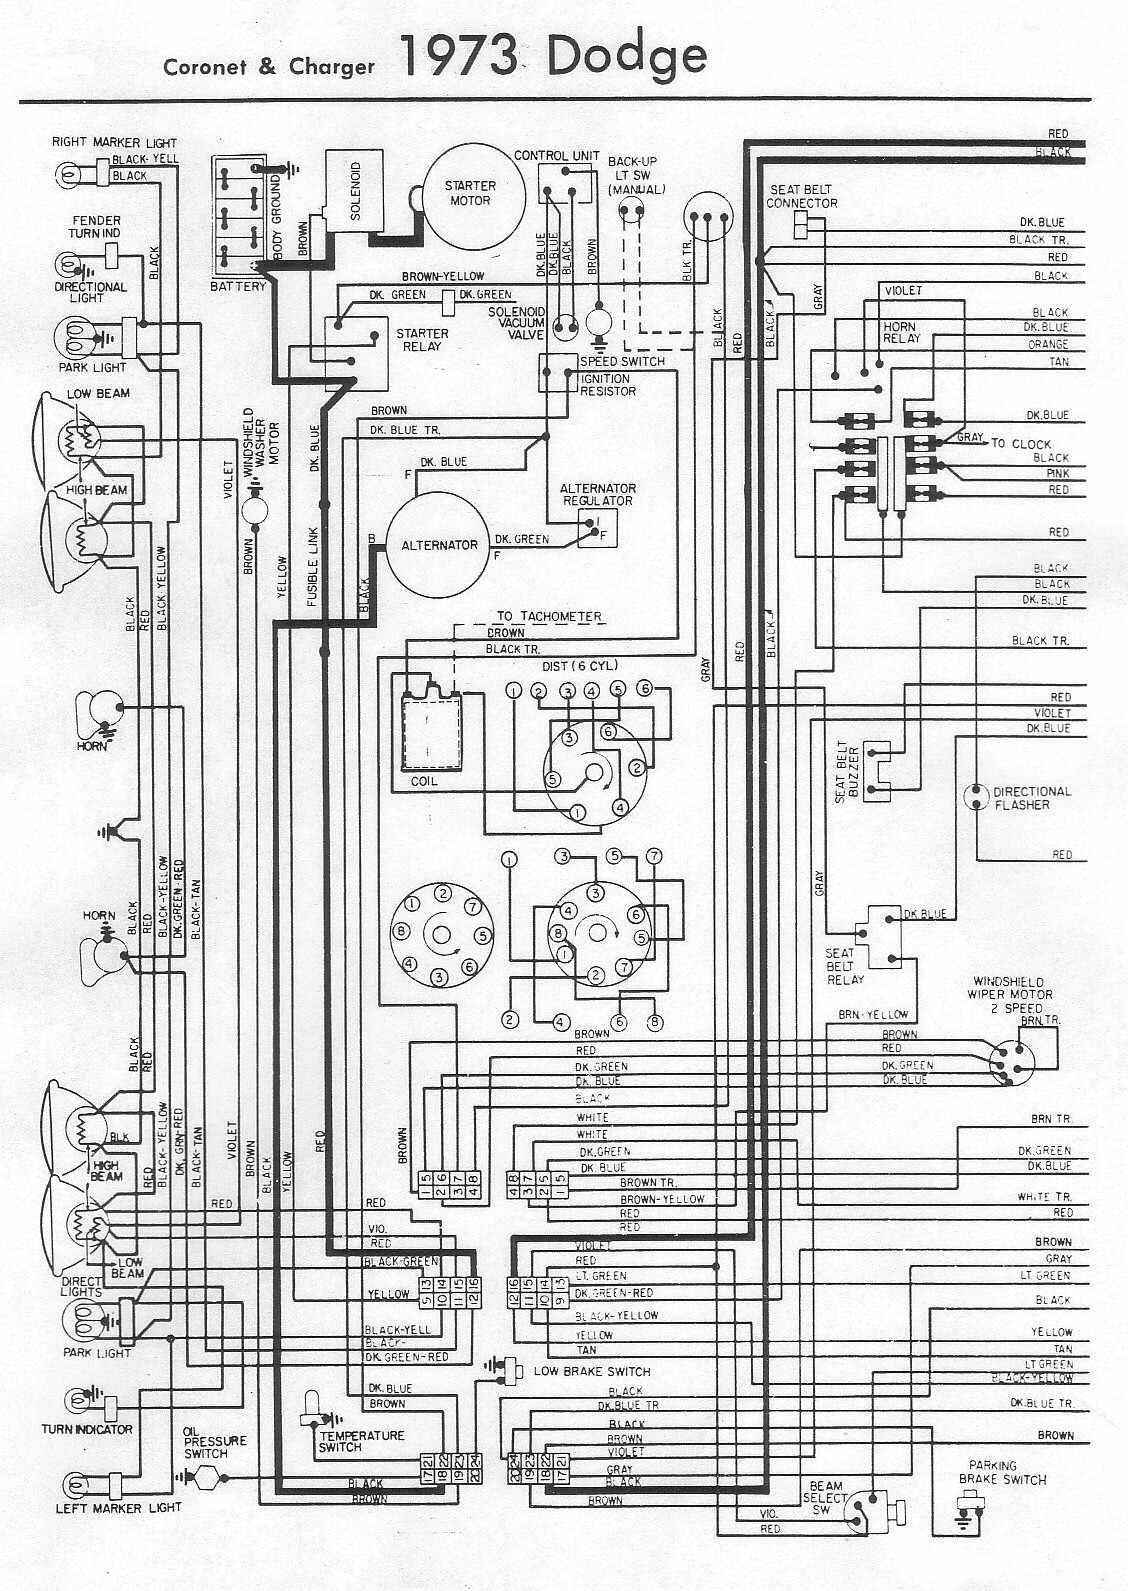 Dodge Car Pdf Manual Wiring Diagram